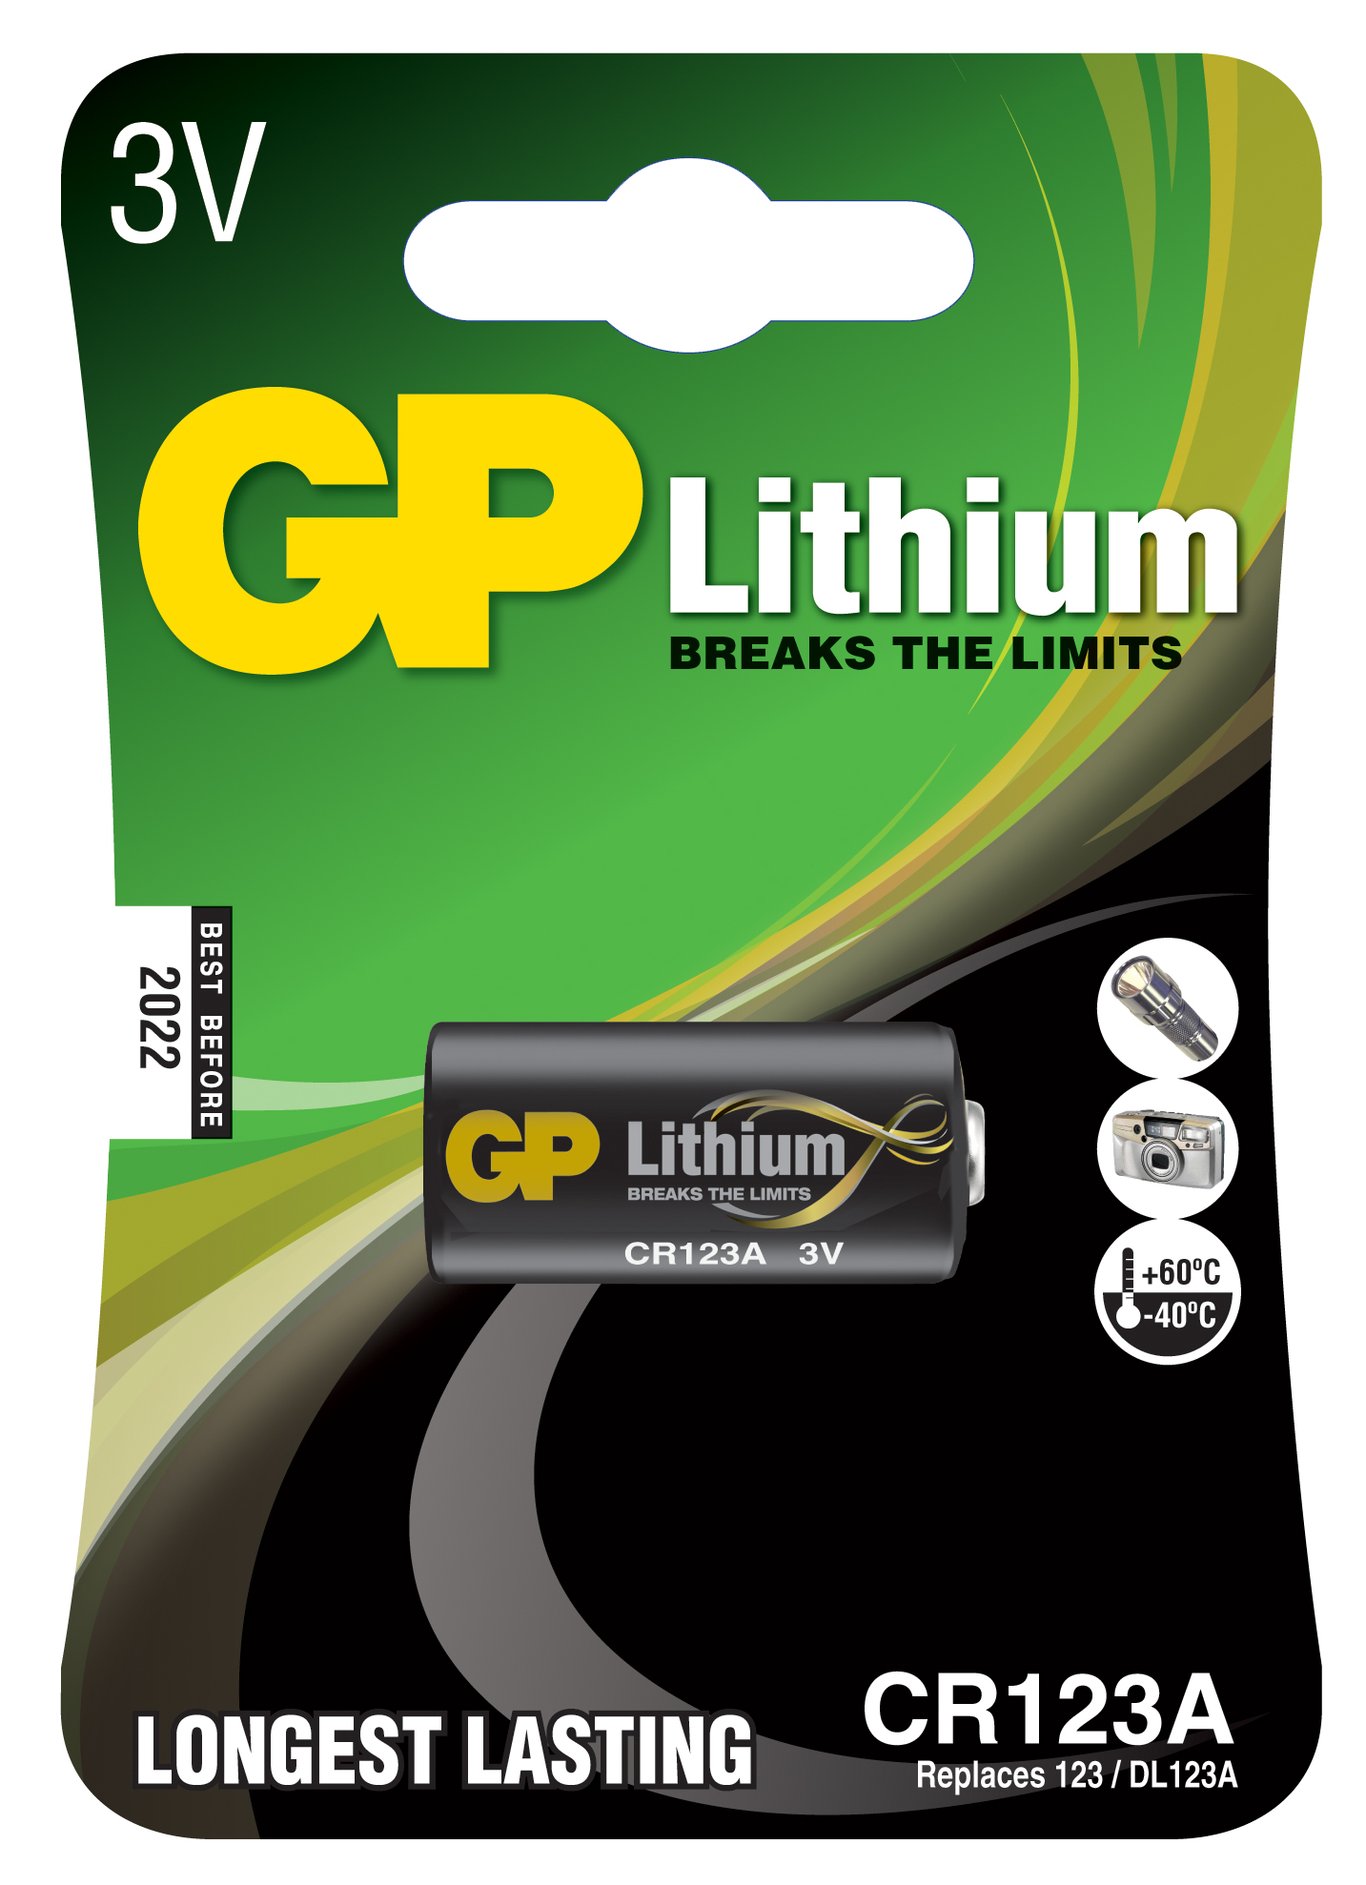 Batteri GP Lithium cr123a foto 3v 39413956